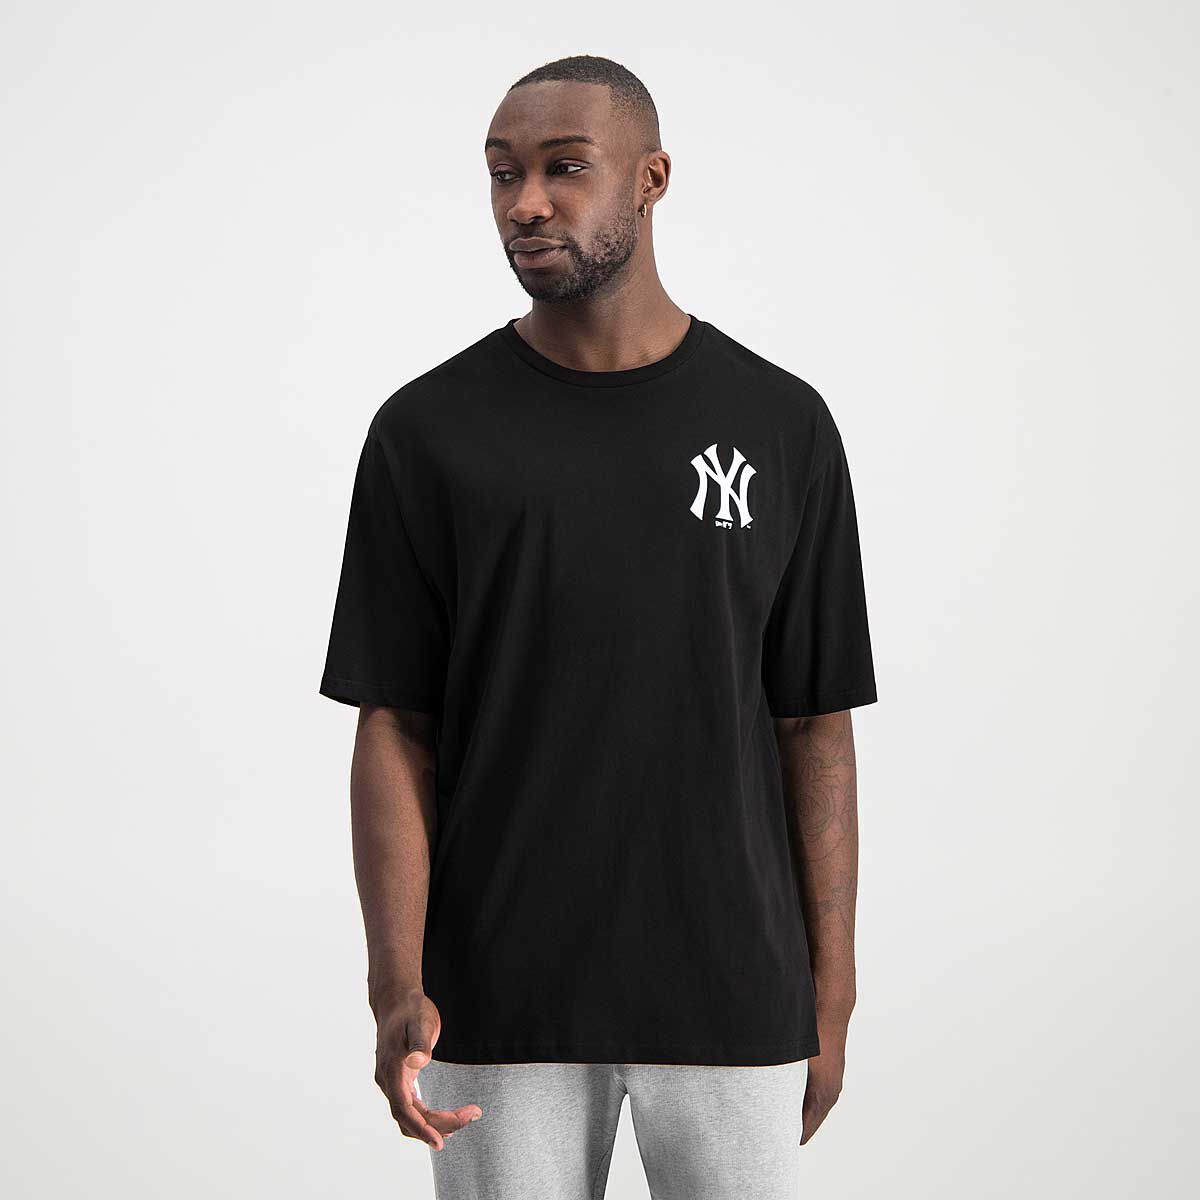 Tampa Bay Rays David Price 14 MLB T Shirt NEW Size XL Blue  eBay